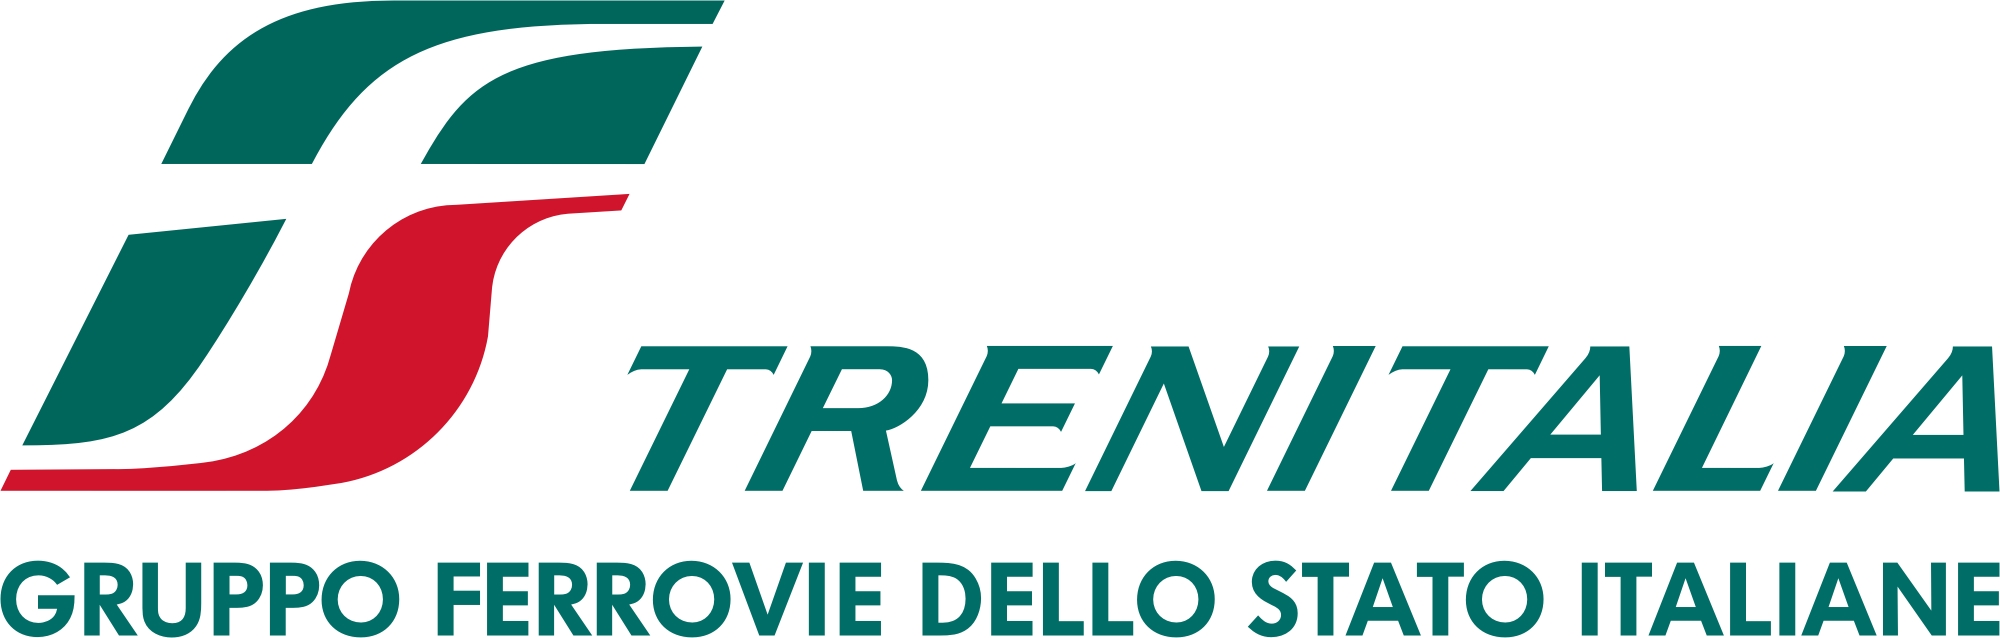 RFI Trenitalia Logo photo - 1